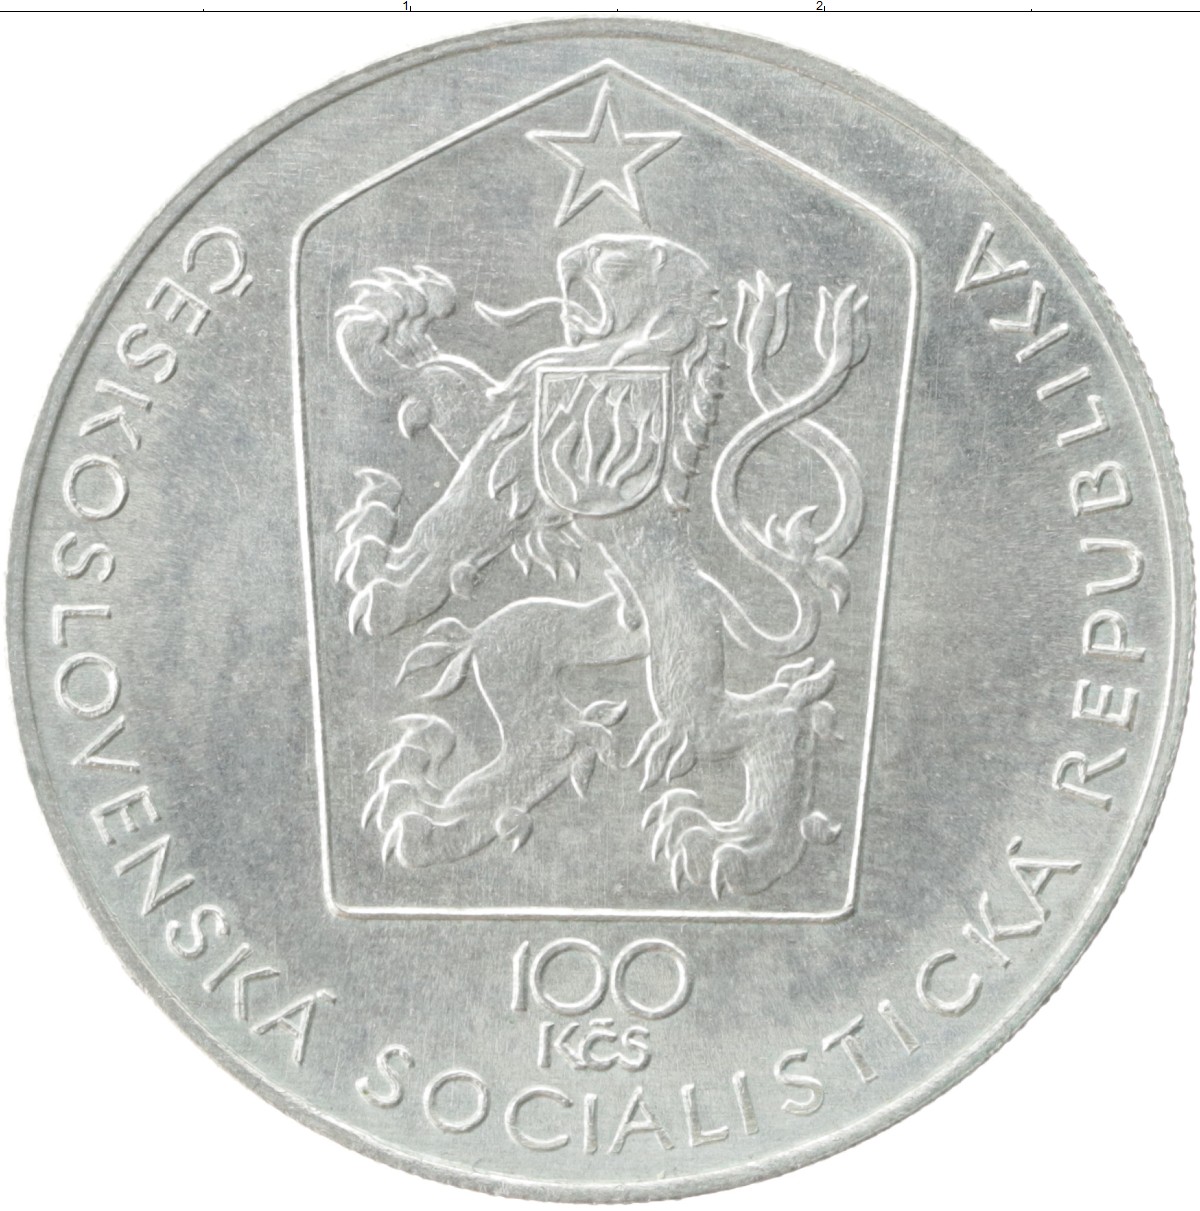 100 крон чехословакия. Чехословацкая крона 1980 года. Монета 1980 Ceskoslovenska. Чехословакия 100 крон. Чехословацкие монеты.